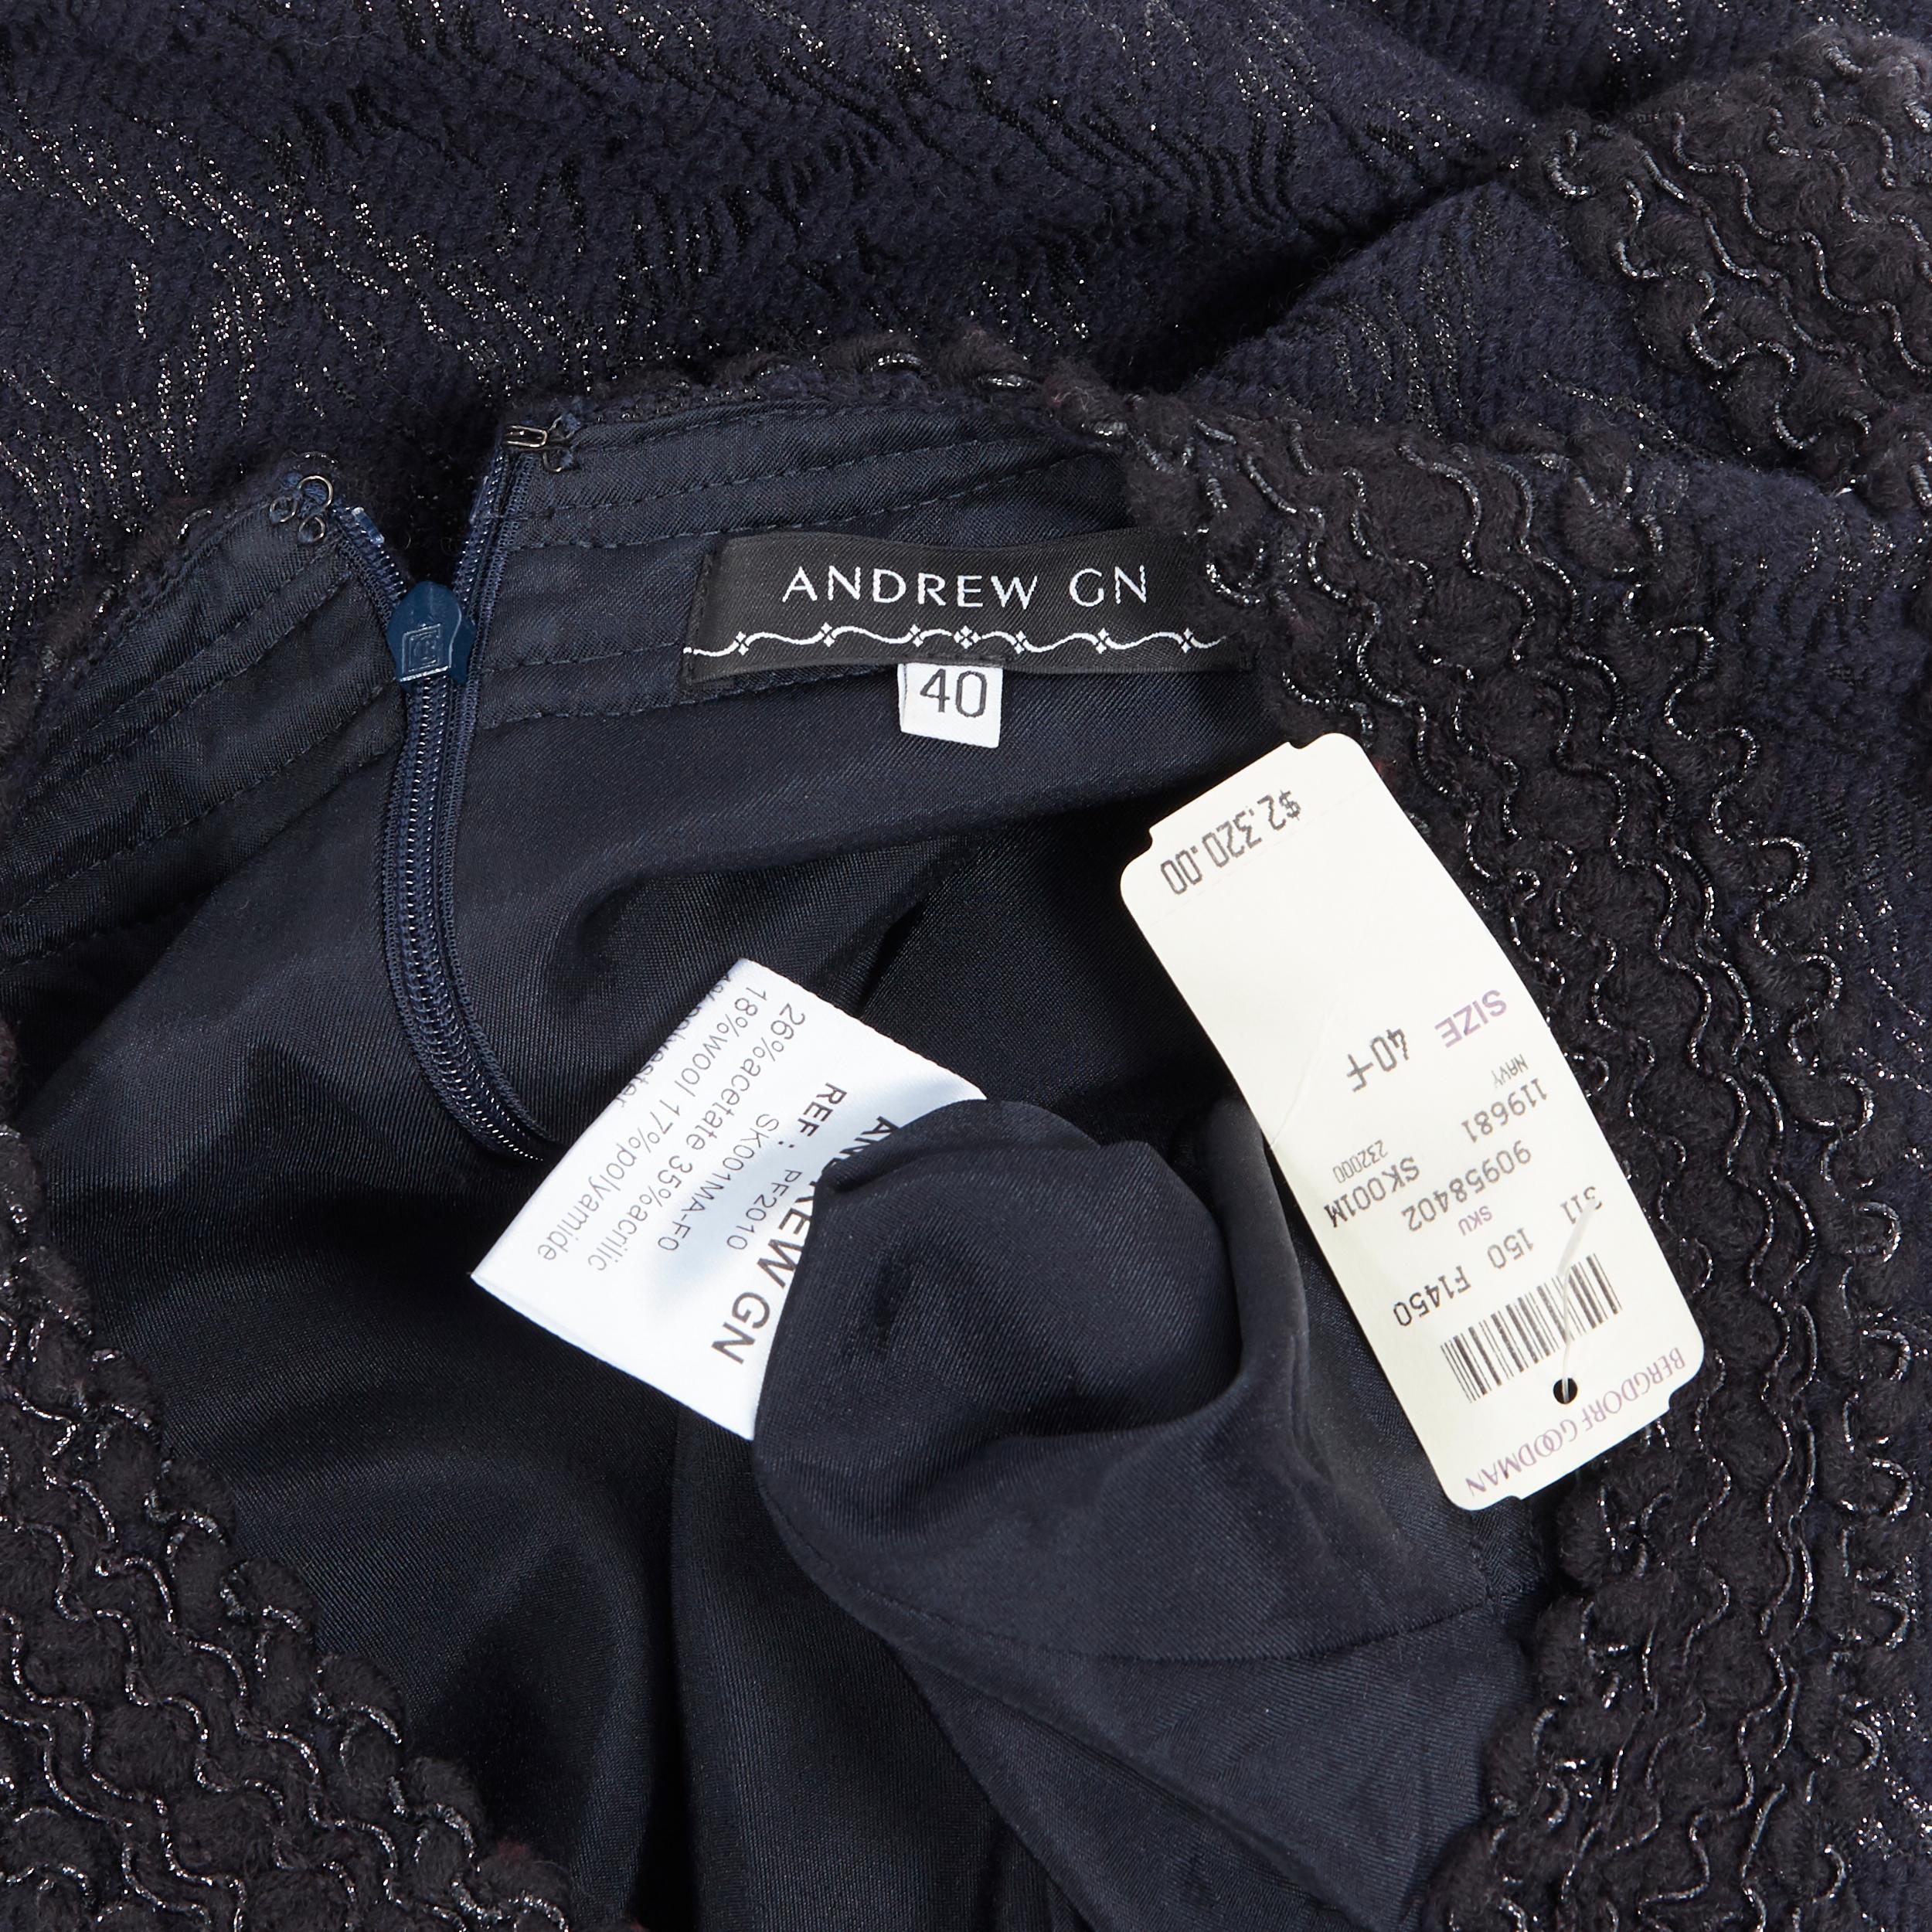 ANDREW GN PF2010 black jacquard wool scalloped tweed trim sheath dress FR40 5